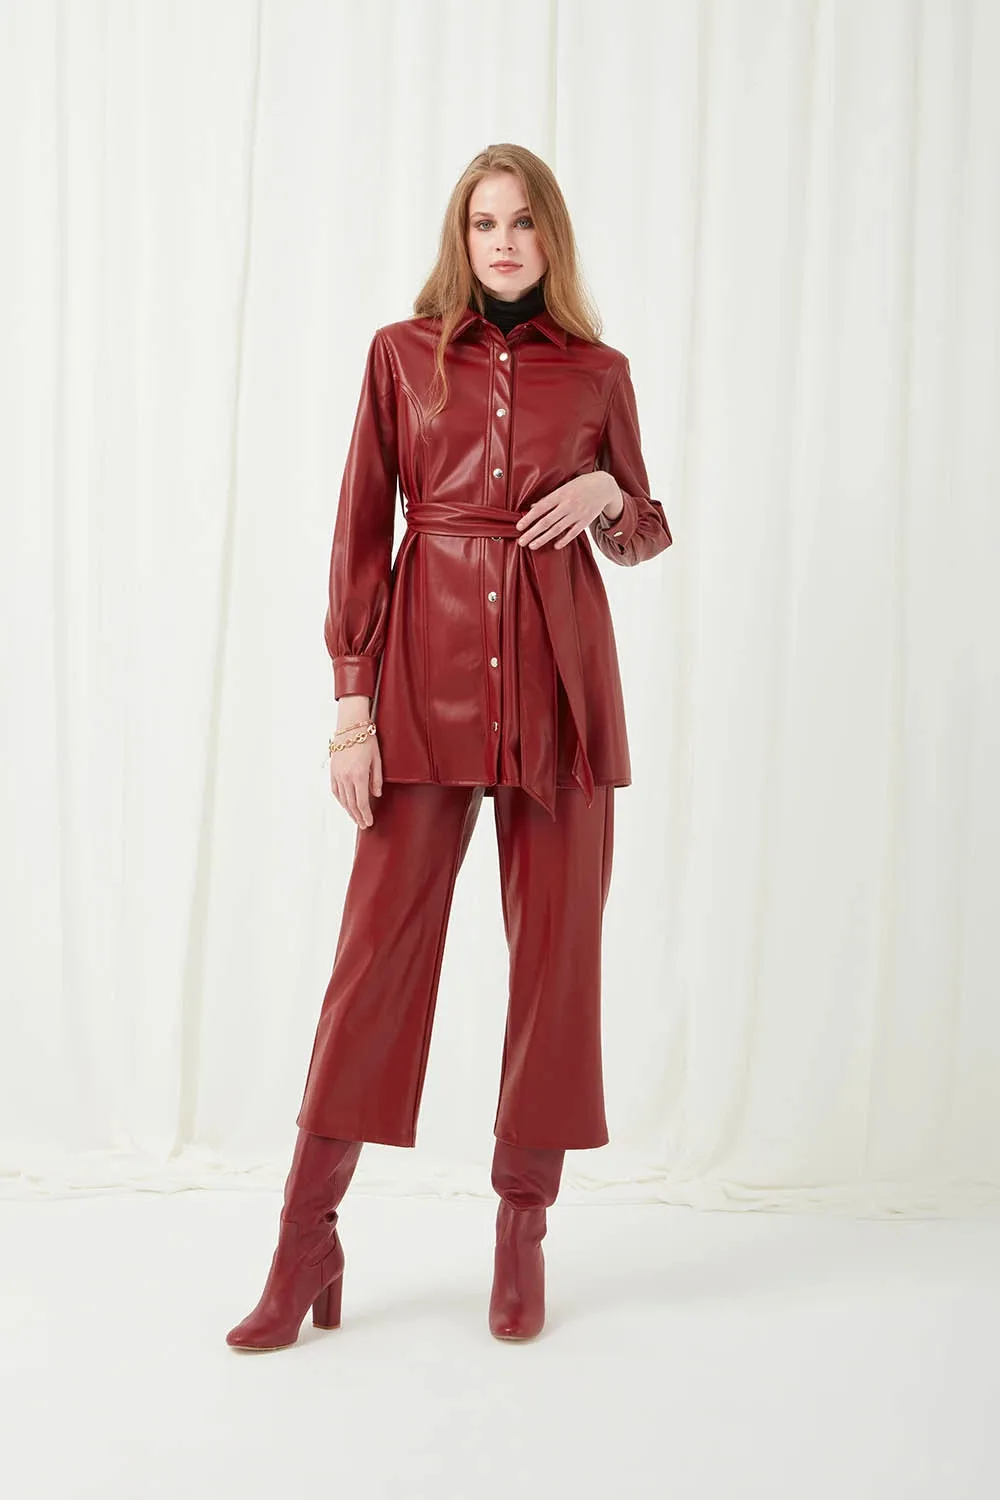 Artificial Leather Beli Kemerli Tunic Trenchcoat Women Outerwear Winter Coats Jacket Modern Belted Kabanlar Quality Material Long Sleeve Korean enlarge